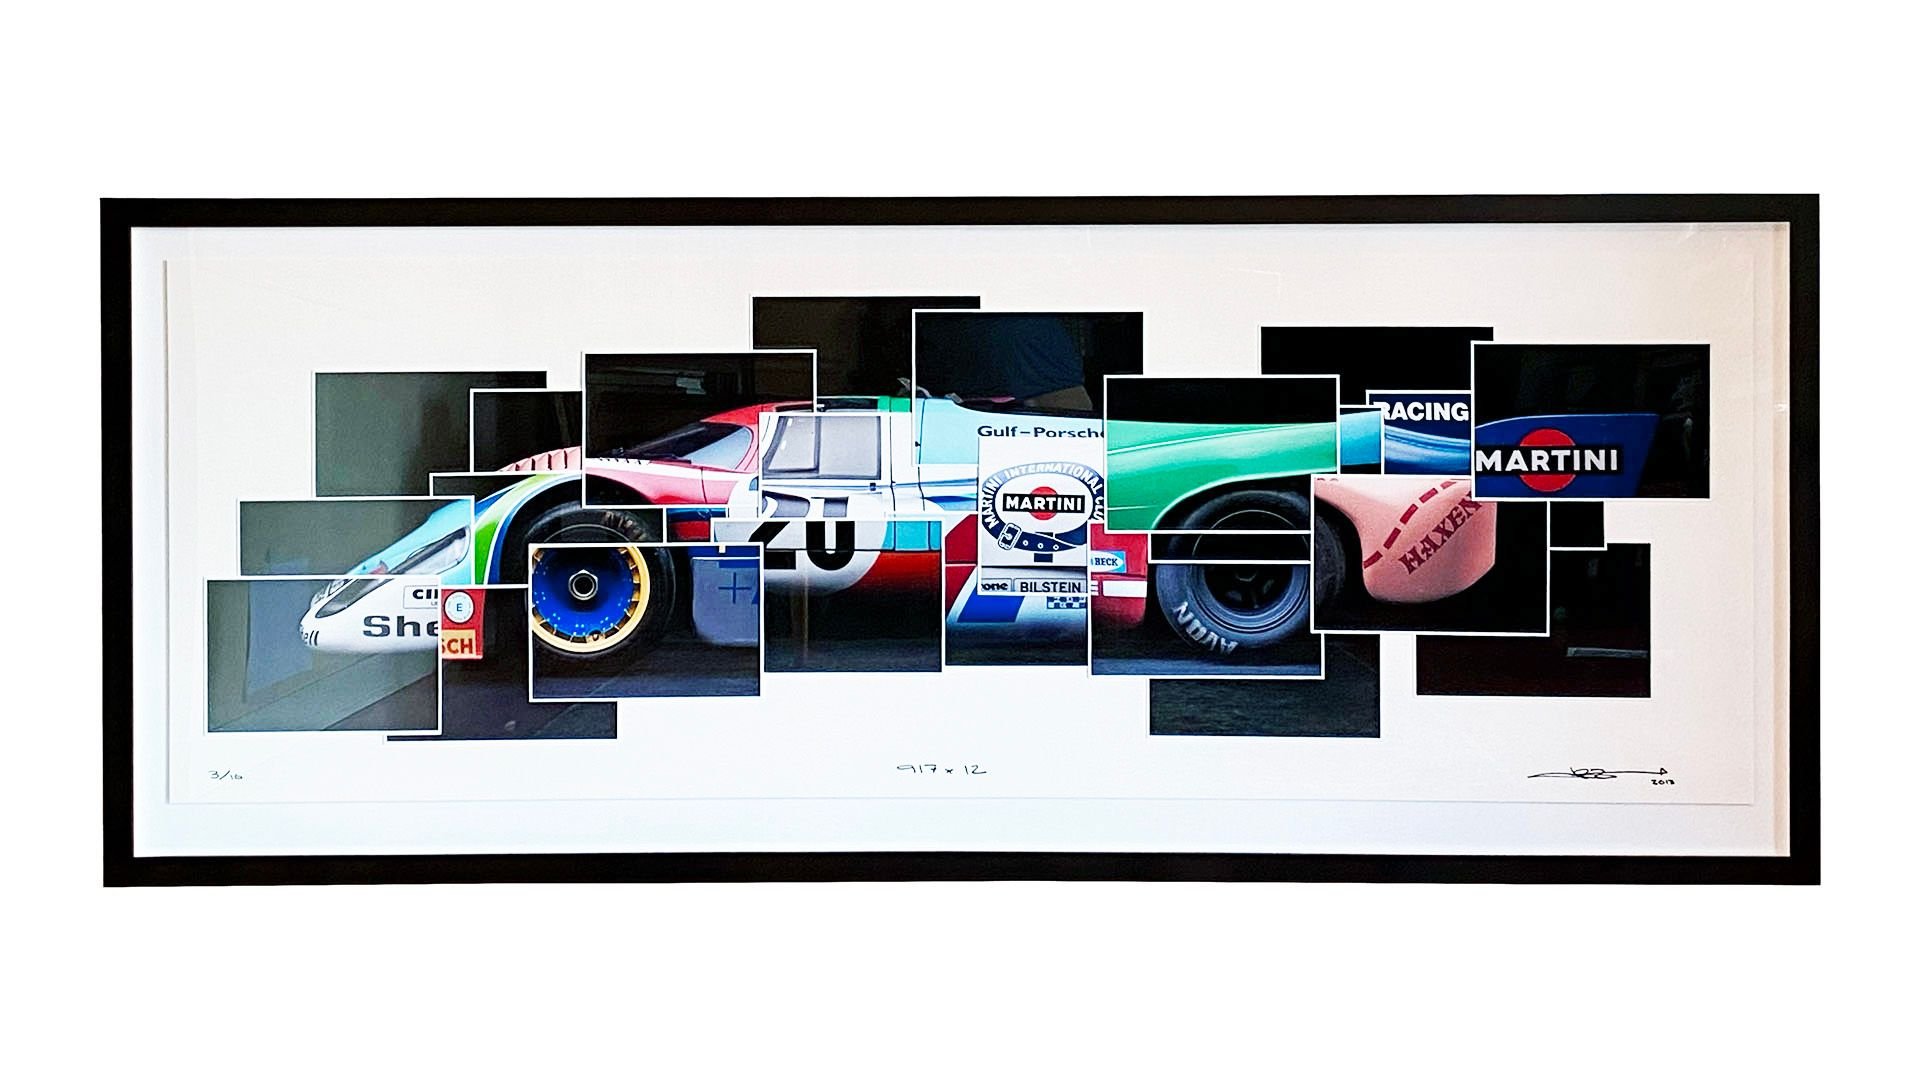 Broad Arrow Auctions | “917 x 12” by Jeff Zwart, 2014, No. 3 of 10